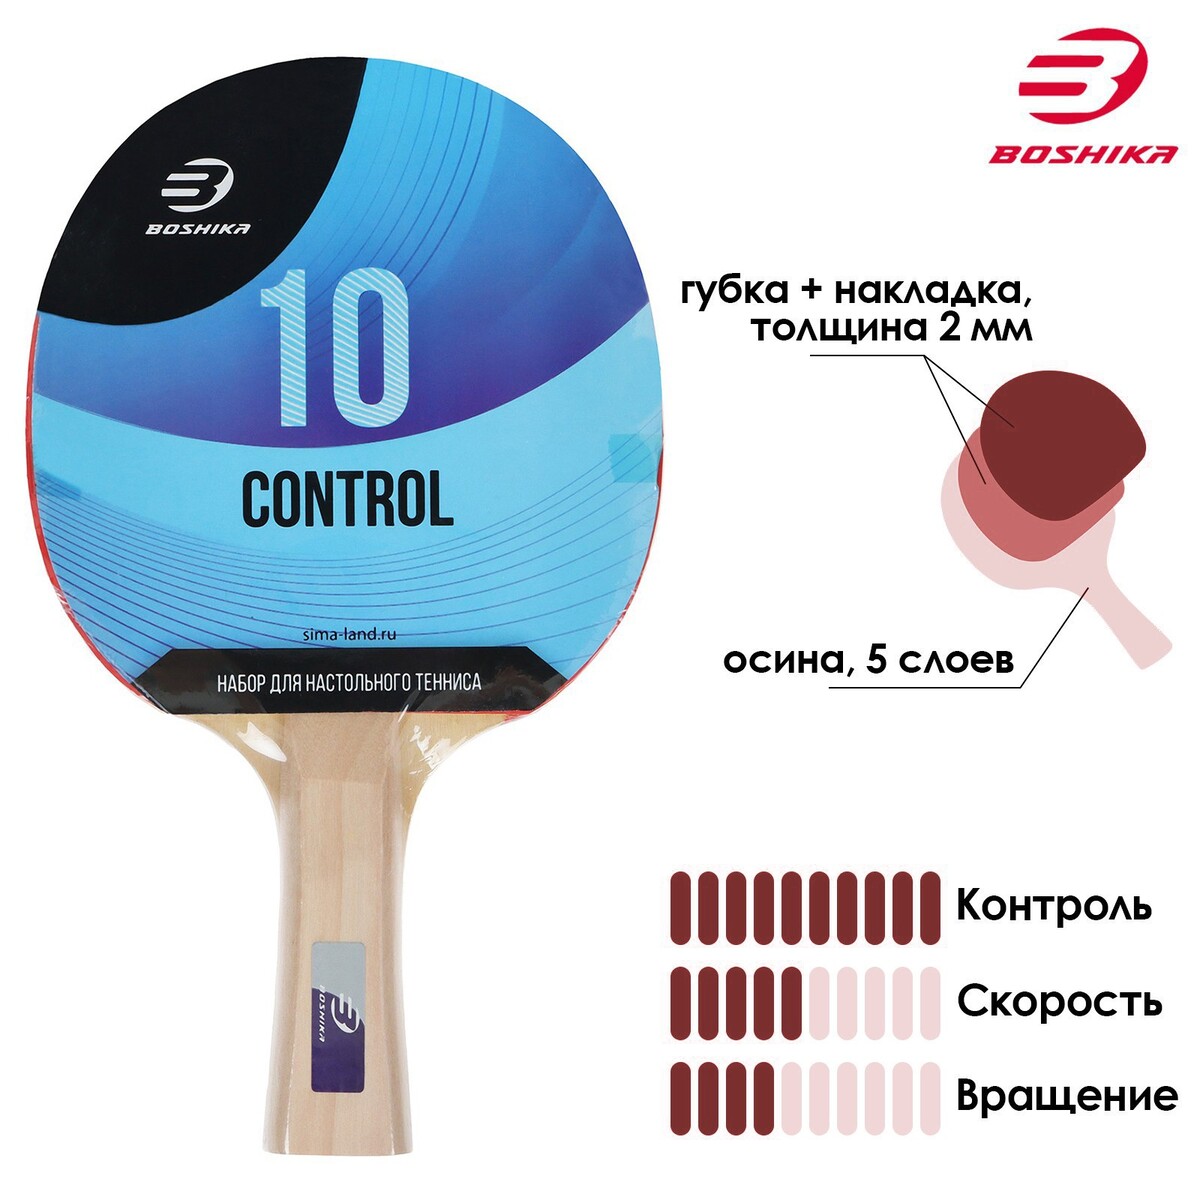 Ракетка для настольного тенниса boshika control 10, для начинающих, накладка 1.5 мм, коническая ручка ракетка для настольного тенниса atemi 300 cv